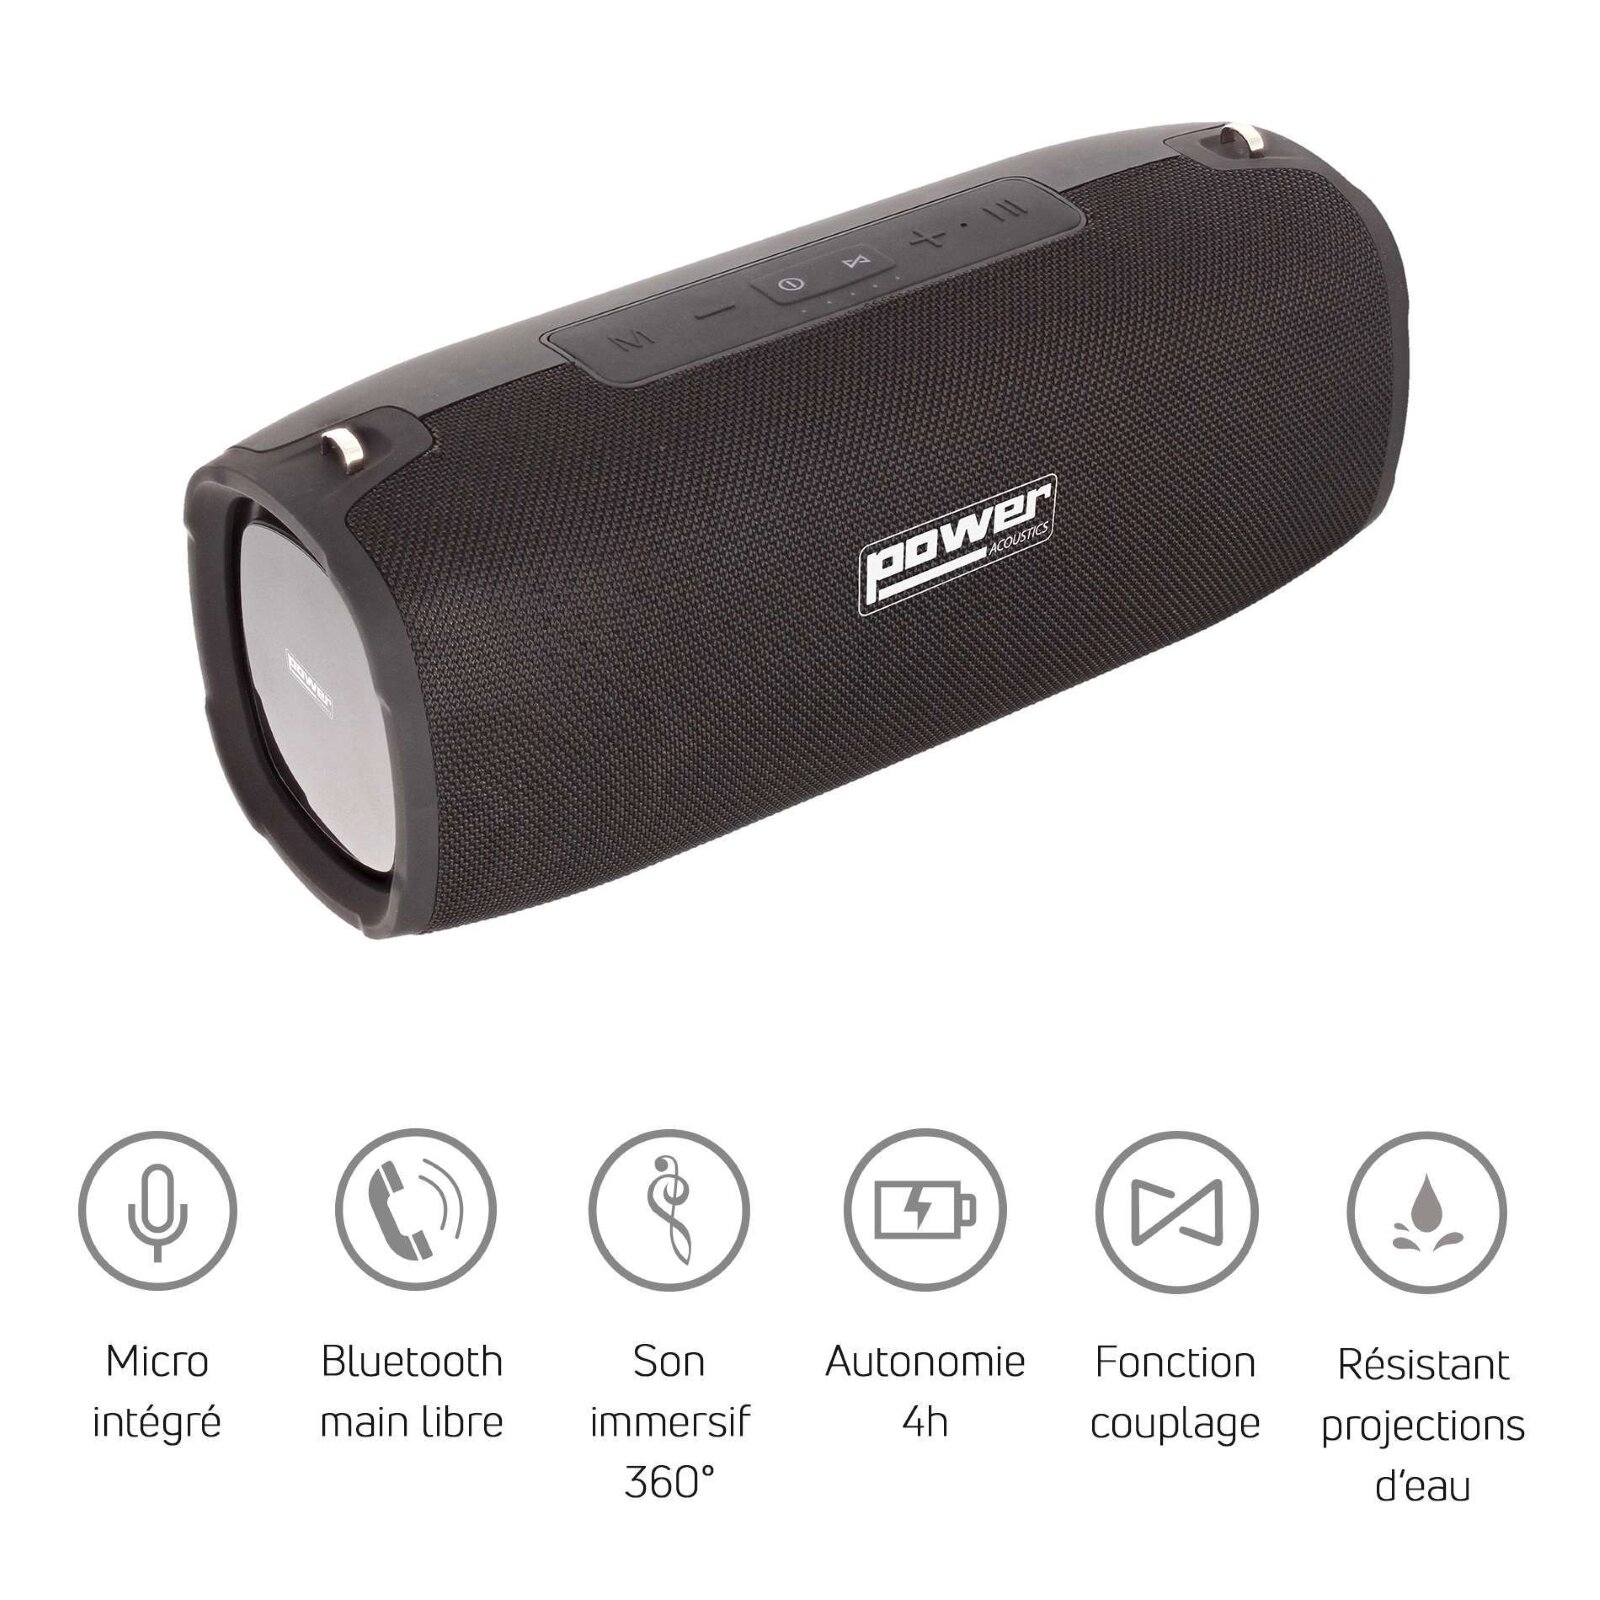 Power Acoustics Portable Bluetooth Portable Speaker - Black Color (GETONE 50) : photo 1